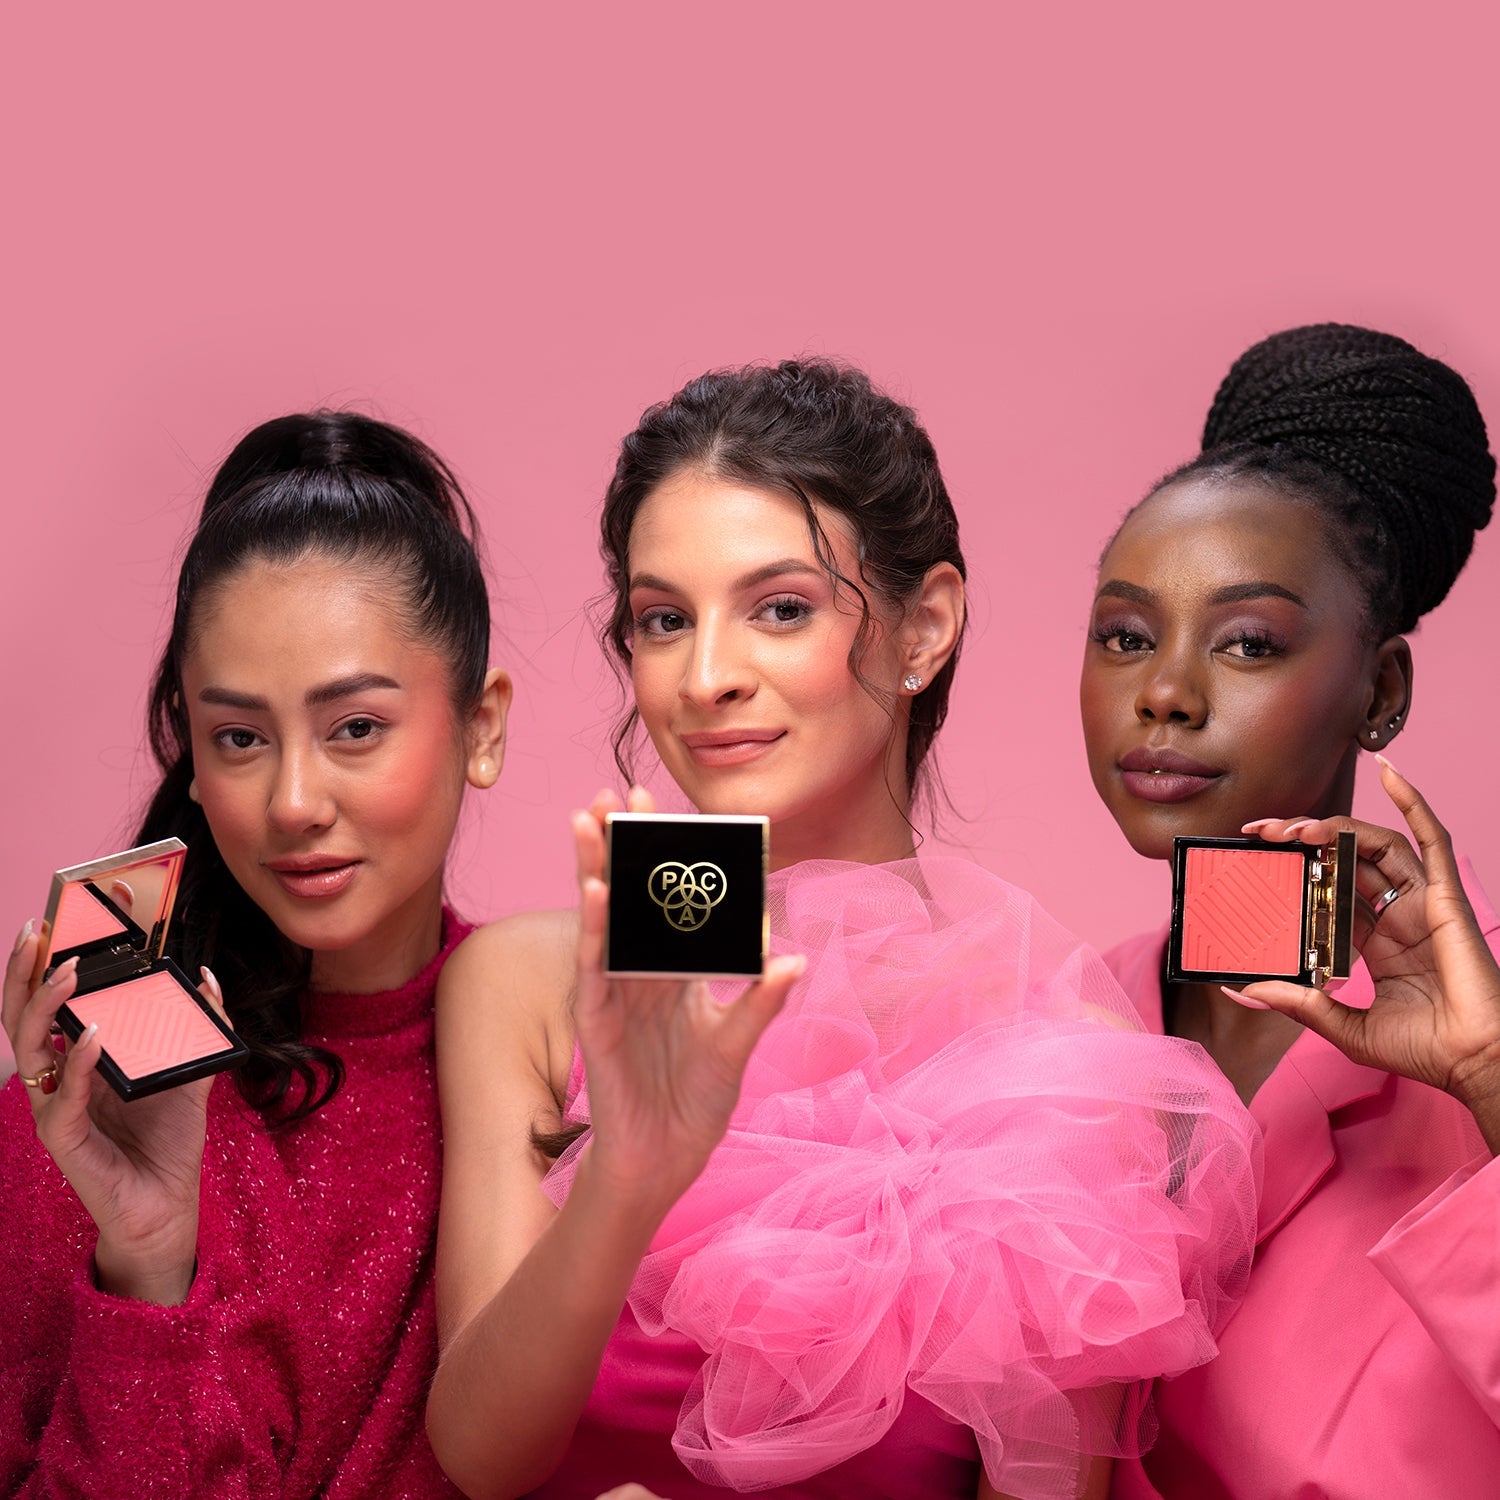 PAC Cosmetics Spotlight Blush (10.6 gm) #Color_Runway